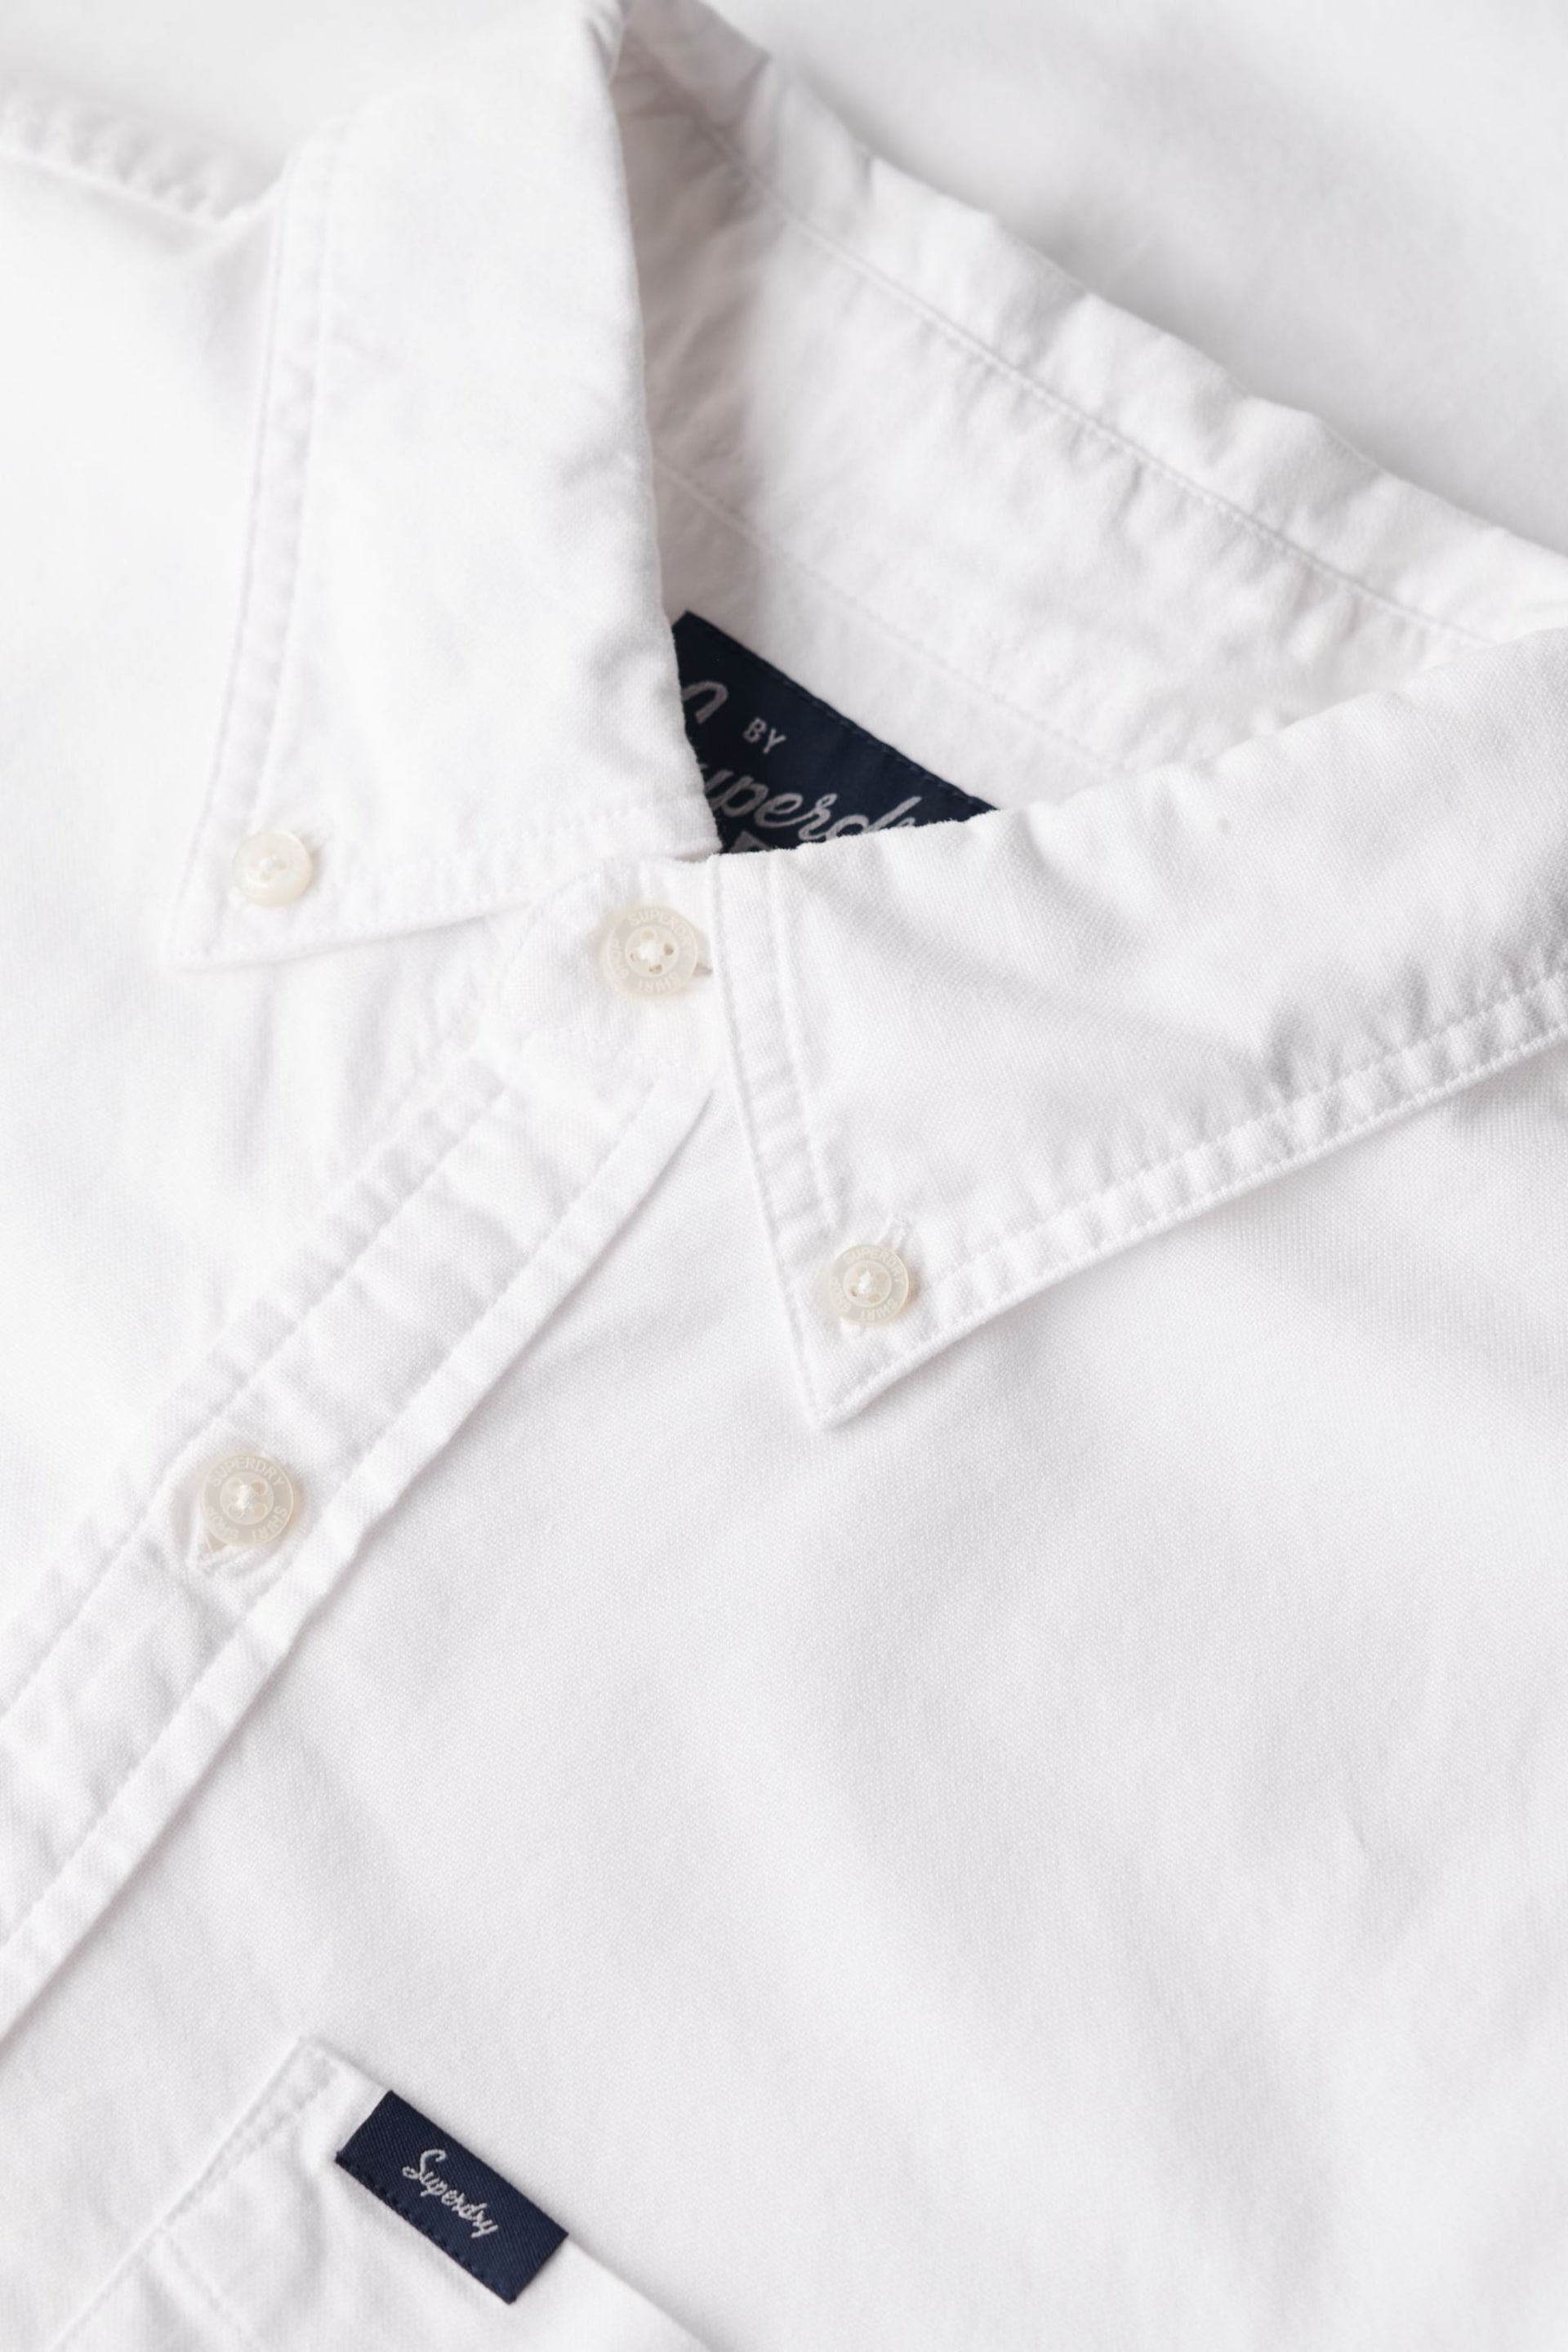 Superdry White Vintage Oxford Short Sleeve Shirt - Image 3 of 5